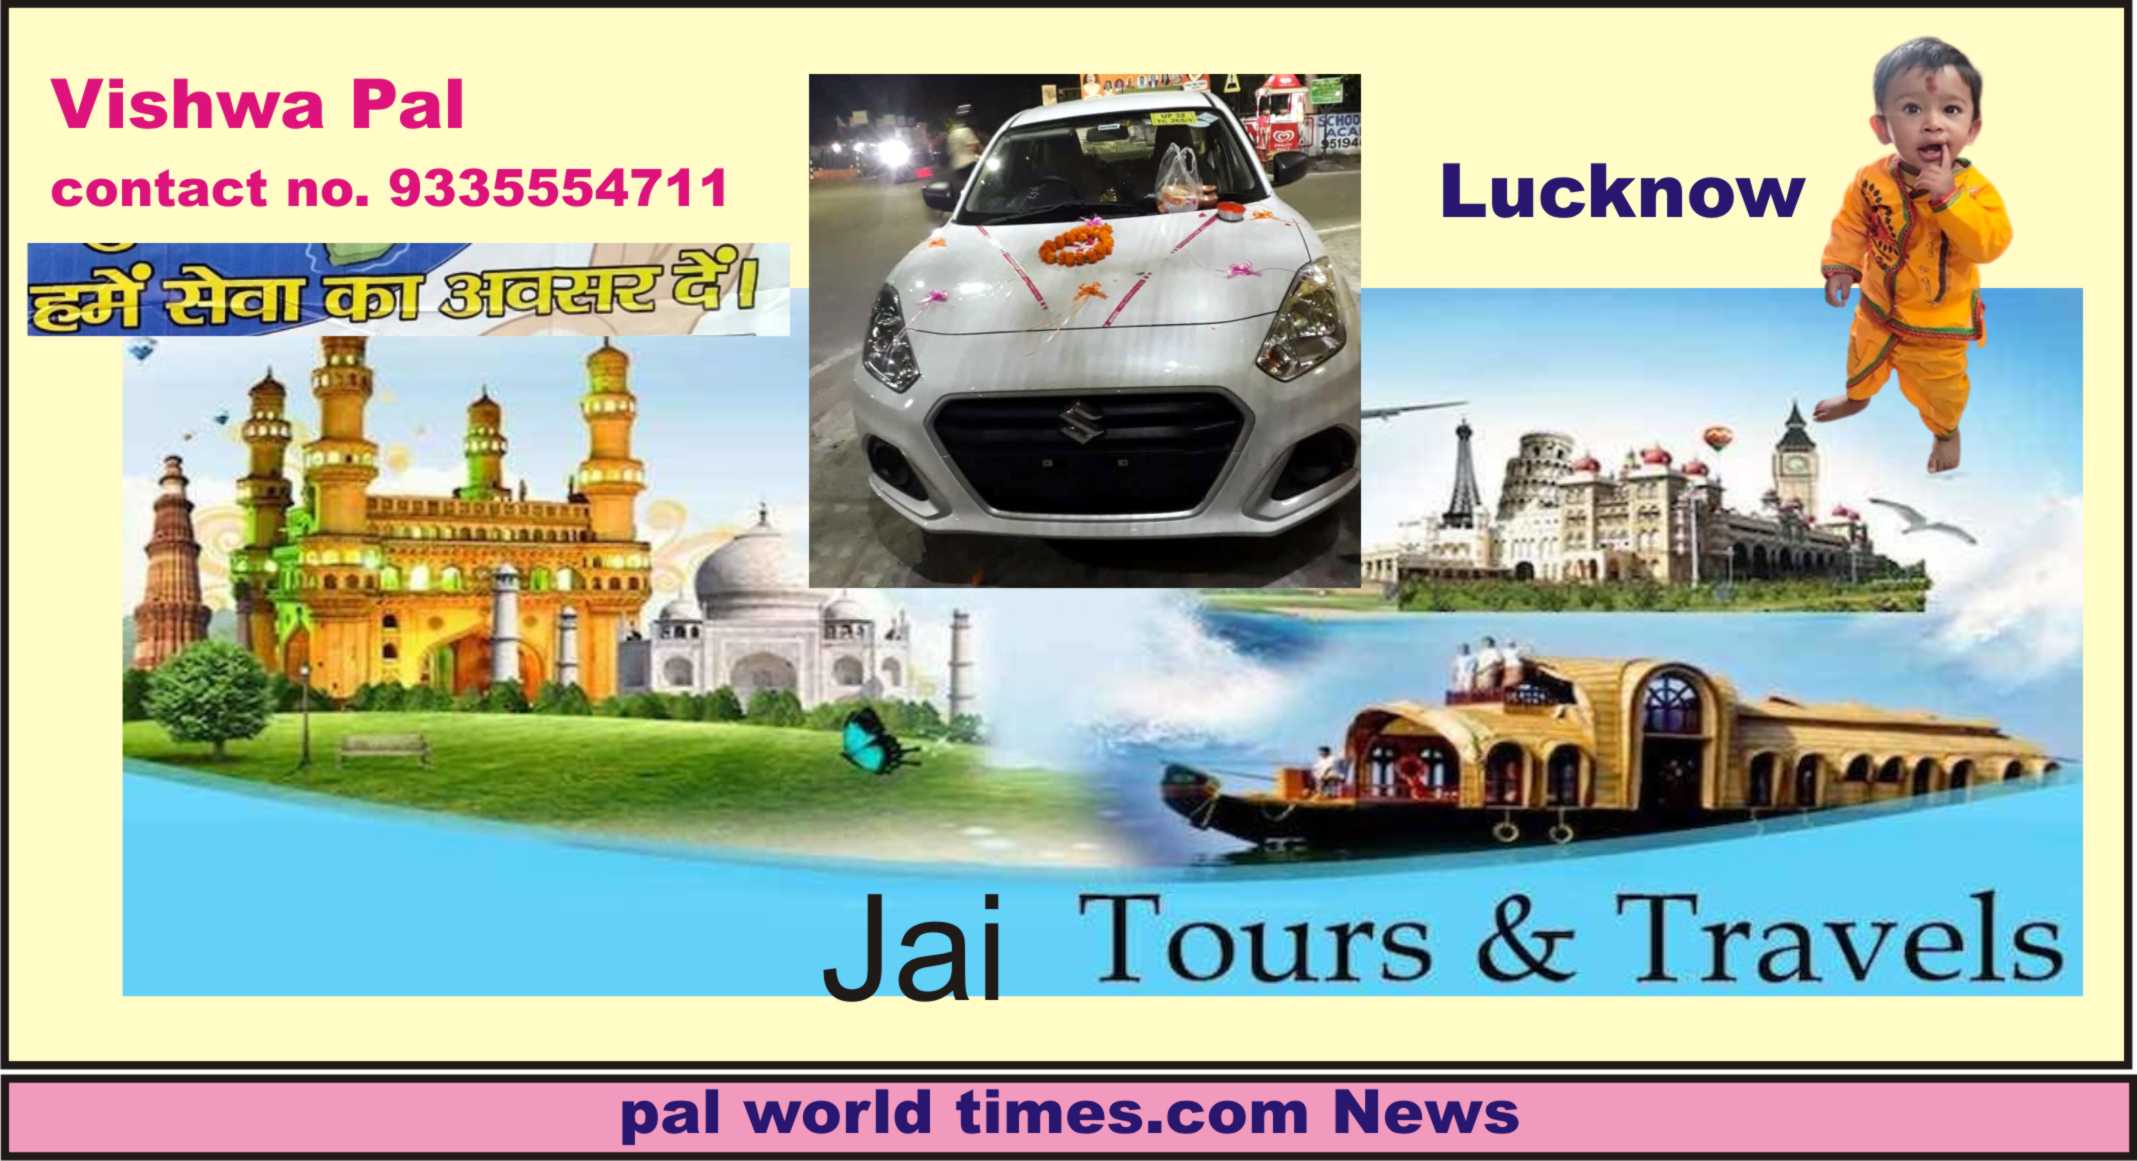 Jai Tours & Travels, L